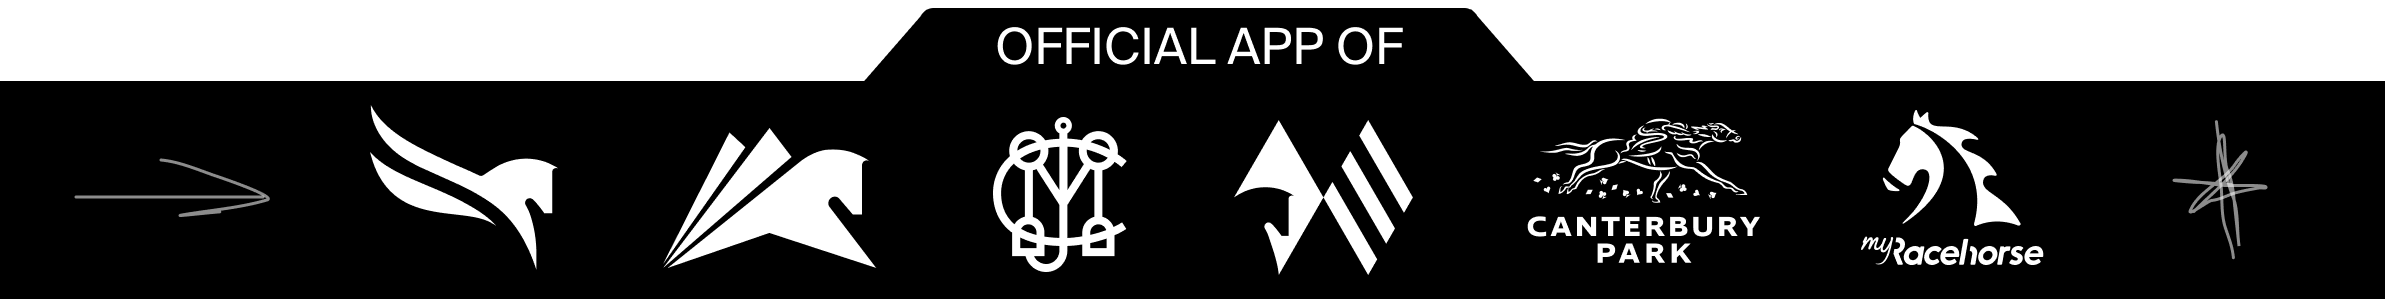 Official app of logo's